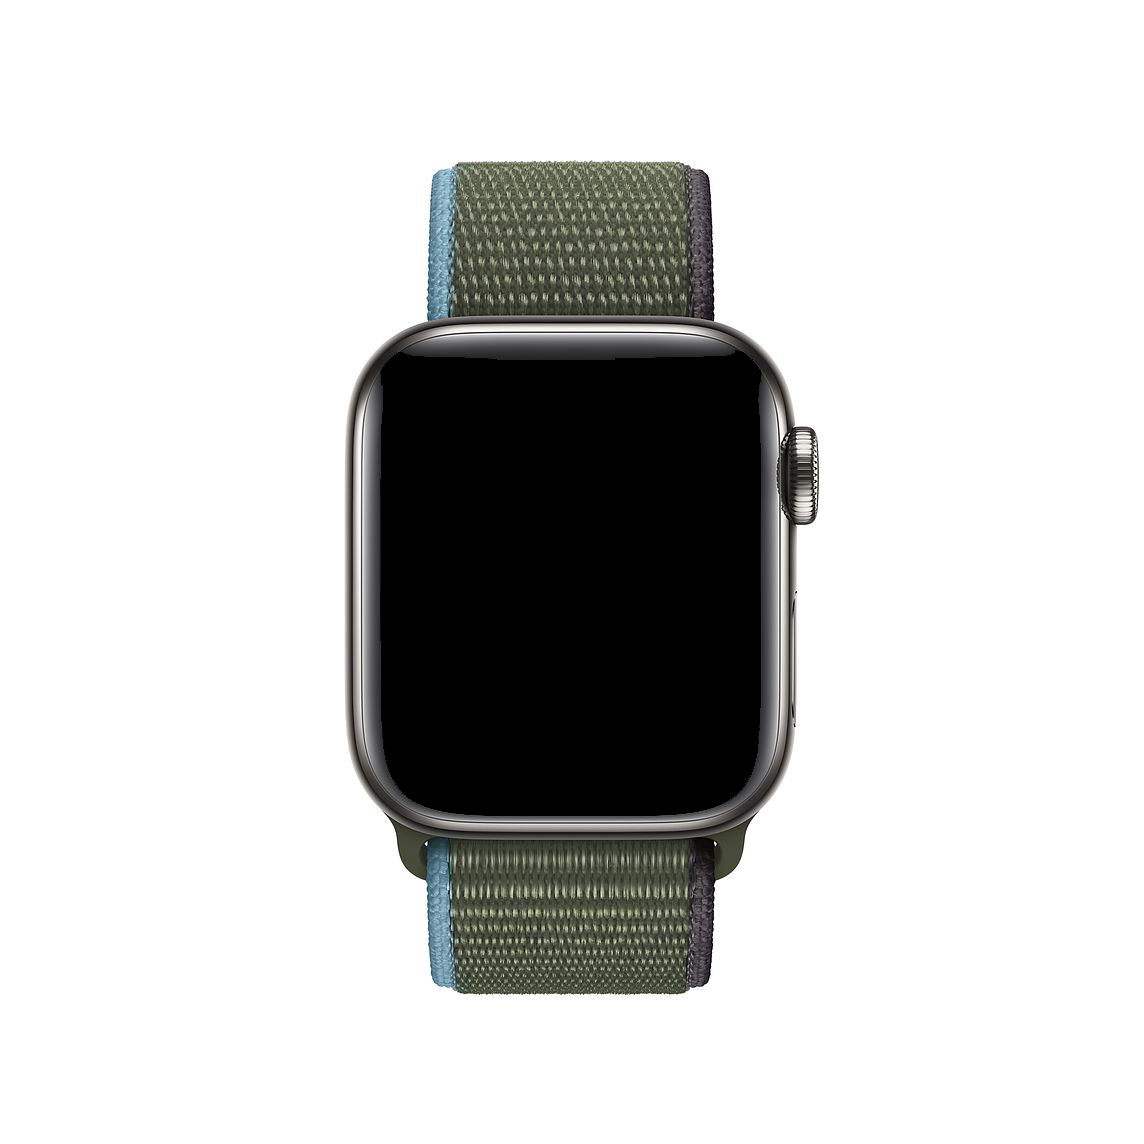 Cinturino nylon sport loop per Apple Watch - verde inverness